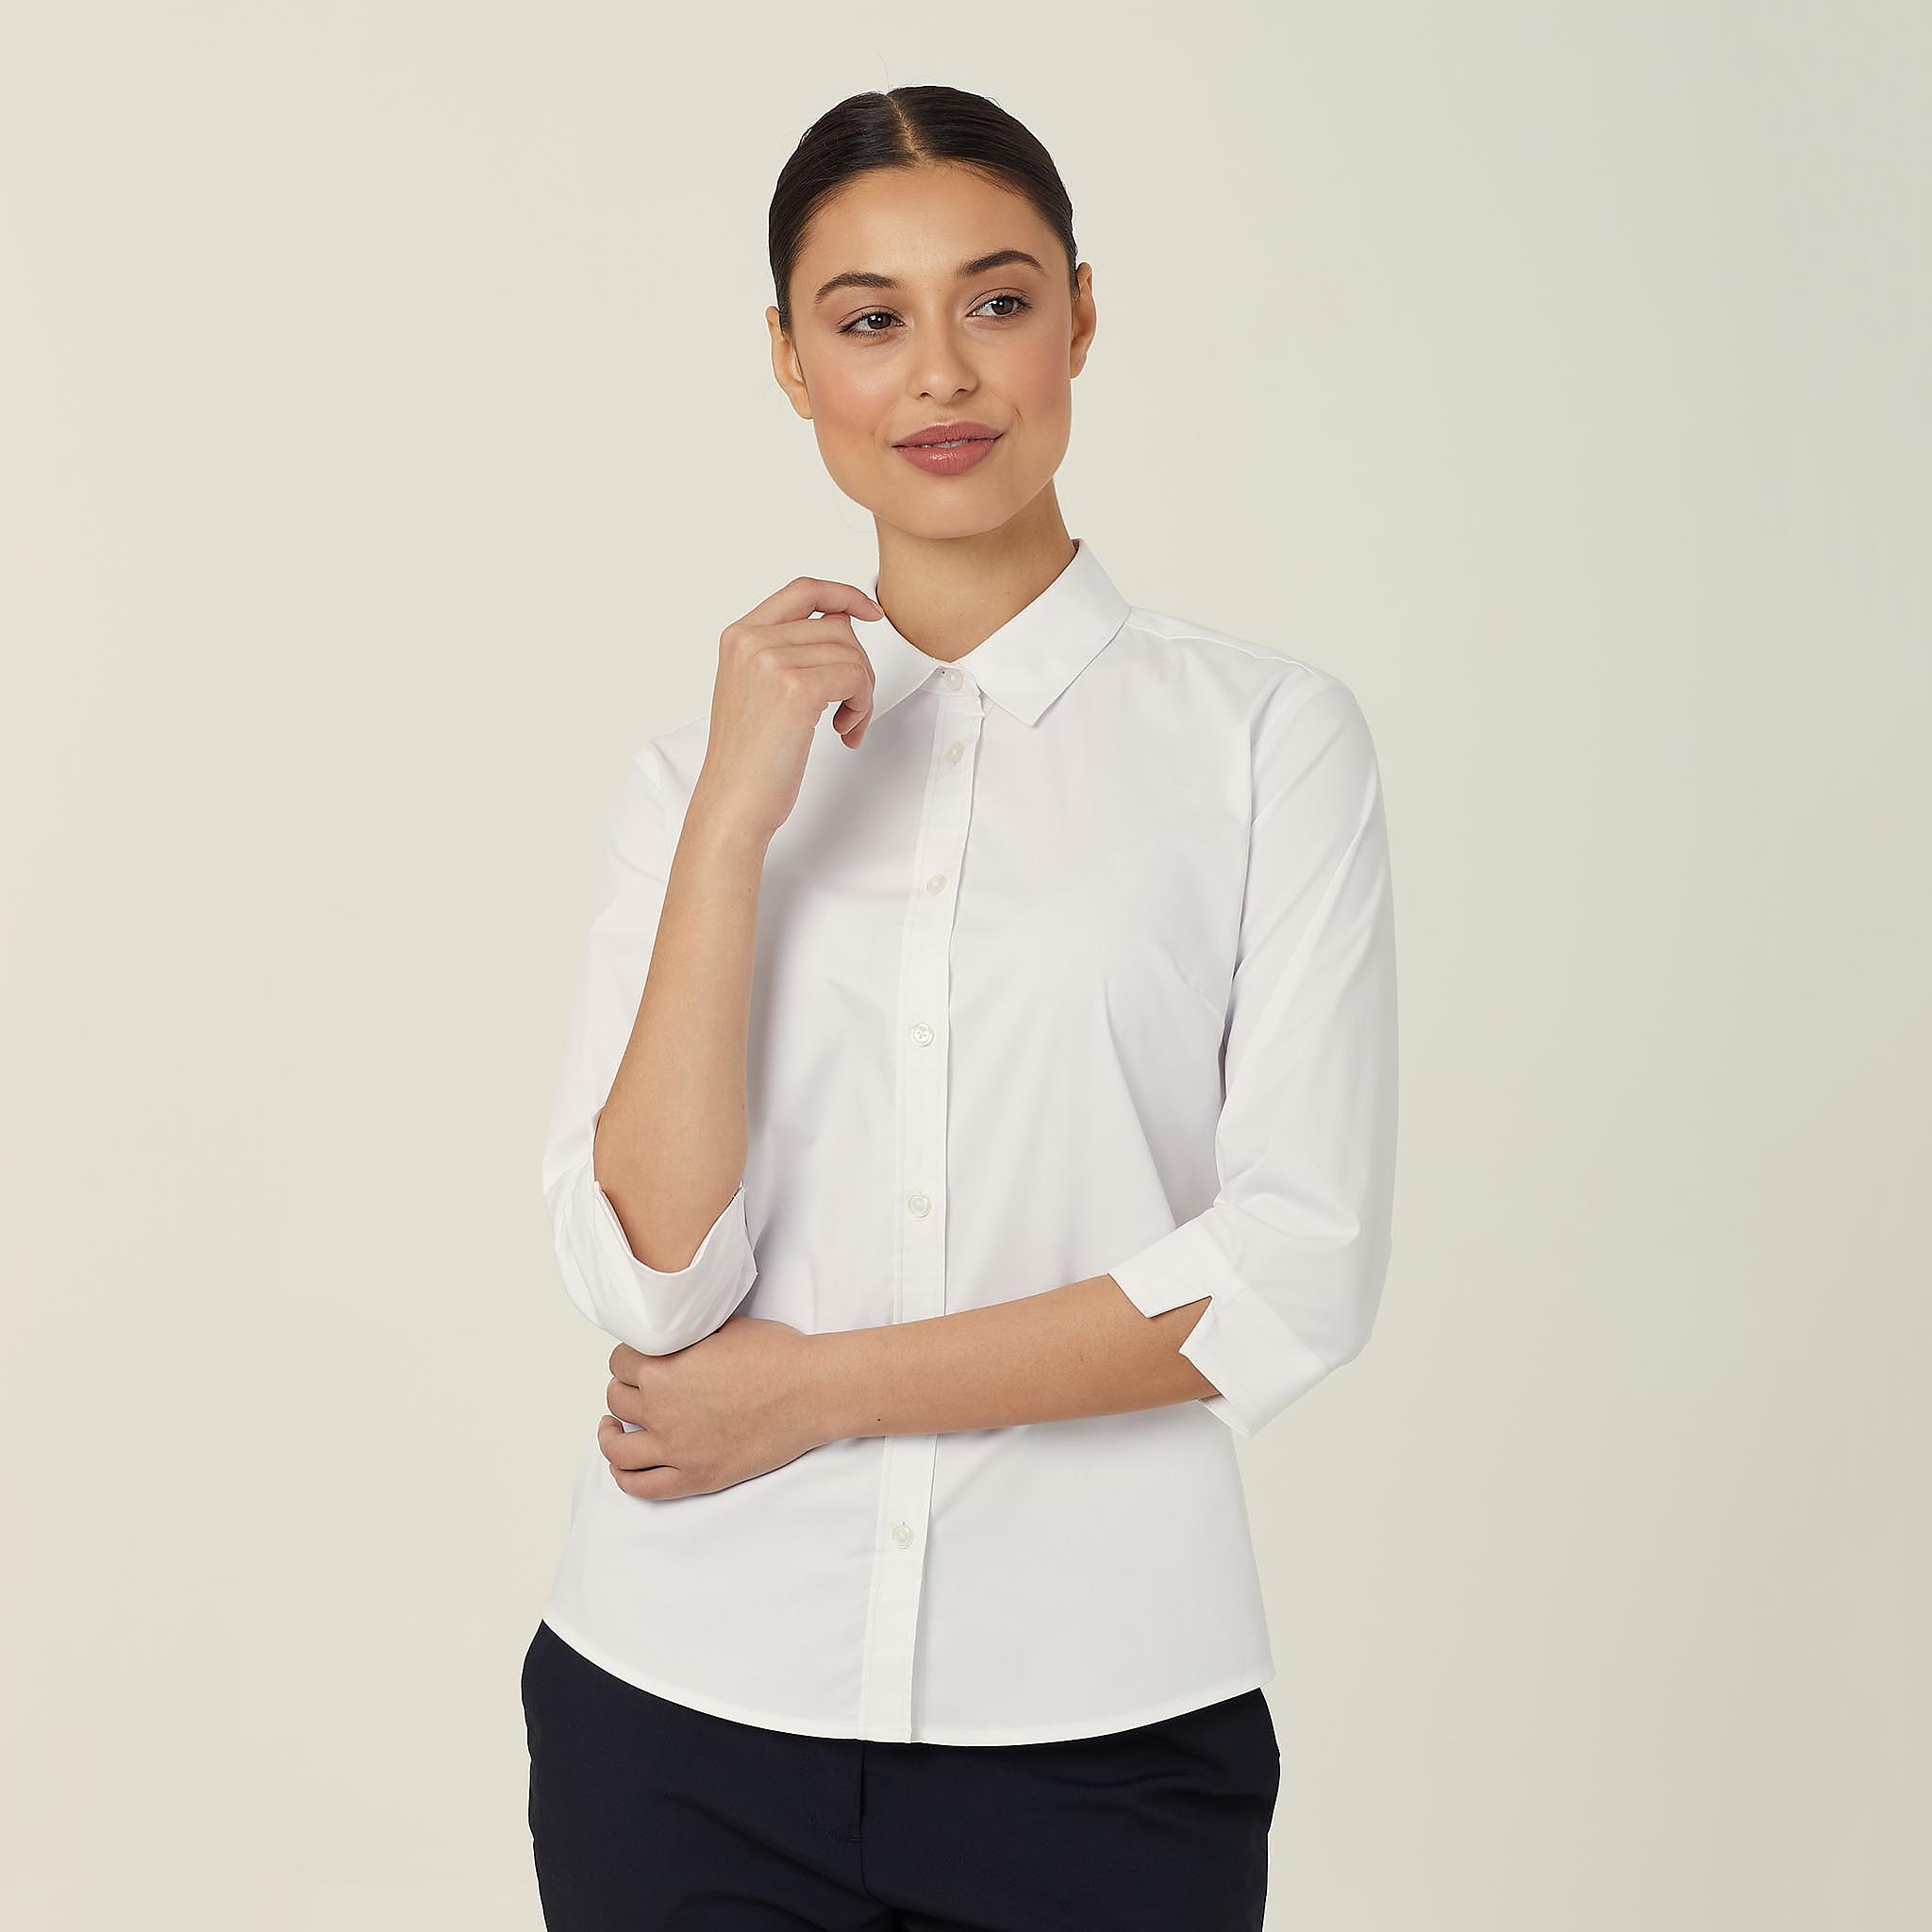 Avignon 3/4 Sleeve Shirt, white | NNT Uniforms